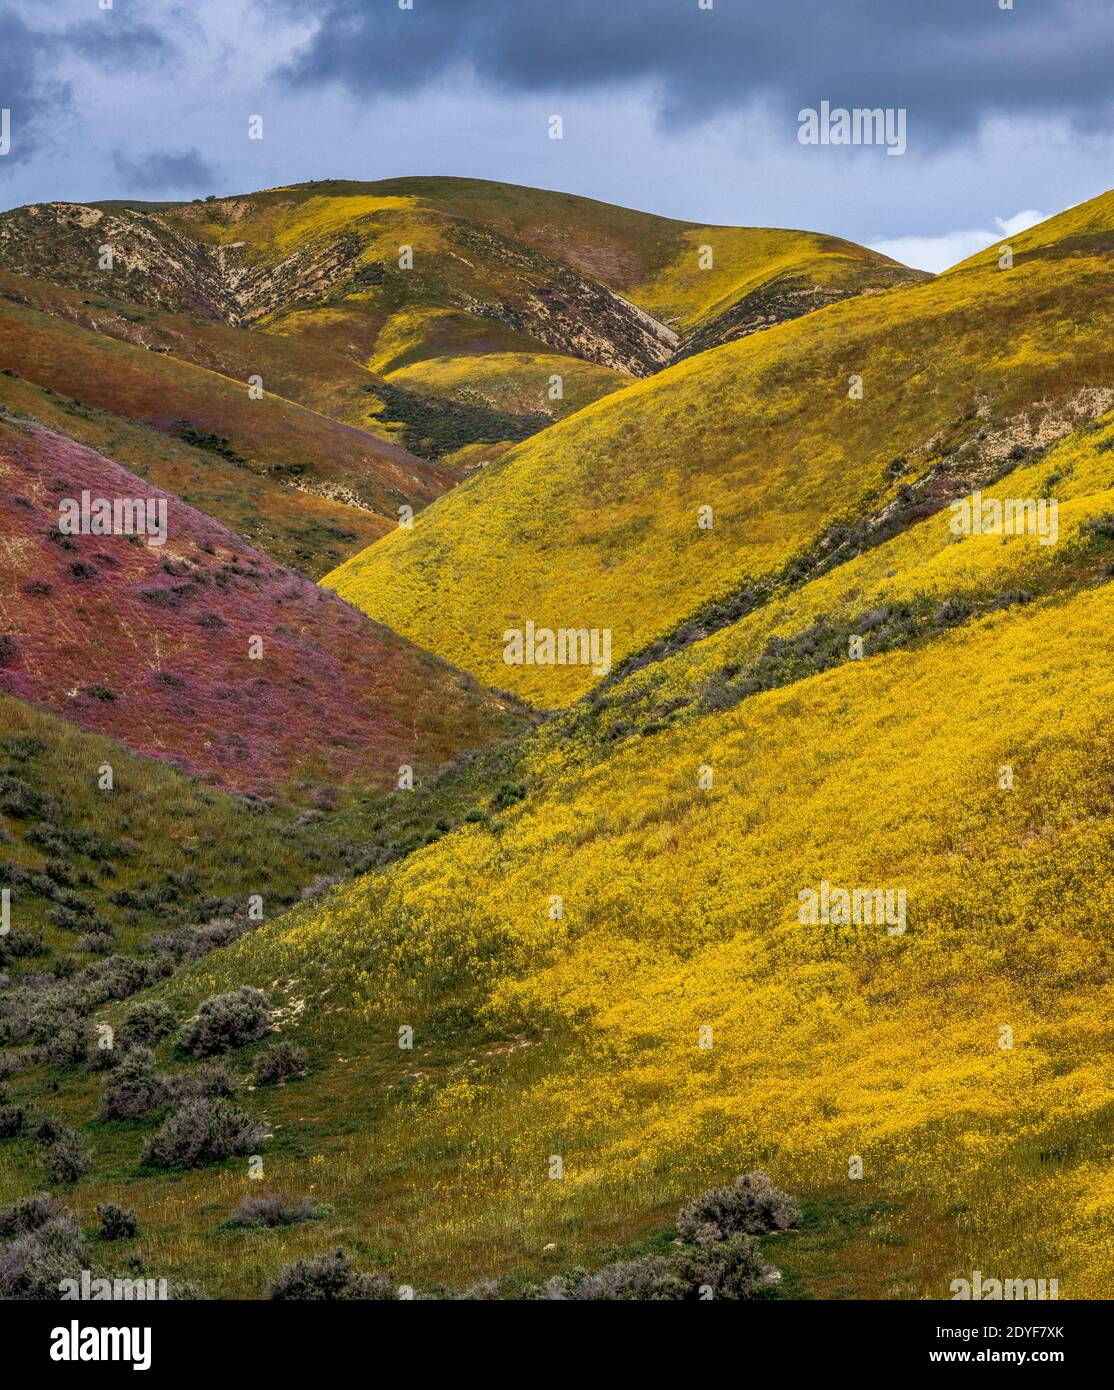 Wildflowers, Tremblor Range, Carrizo Plain National Monument, CA Stock Photo